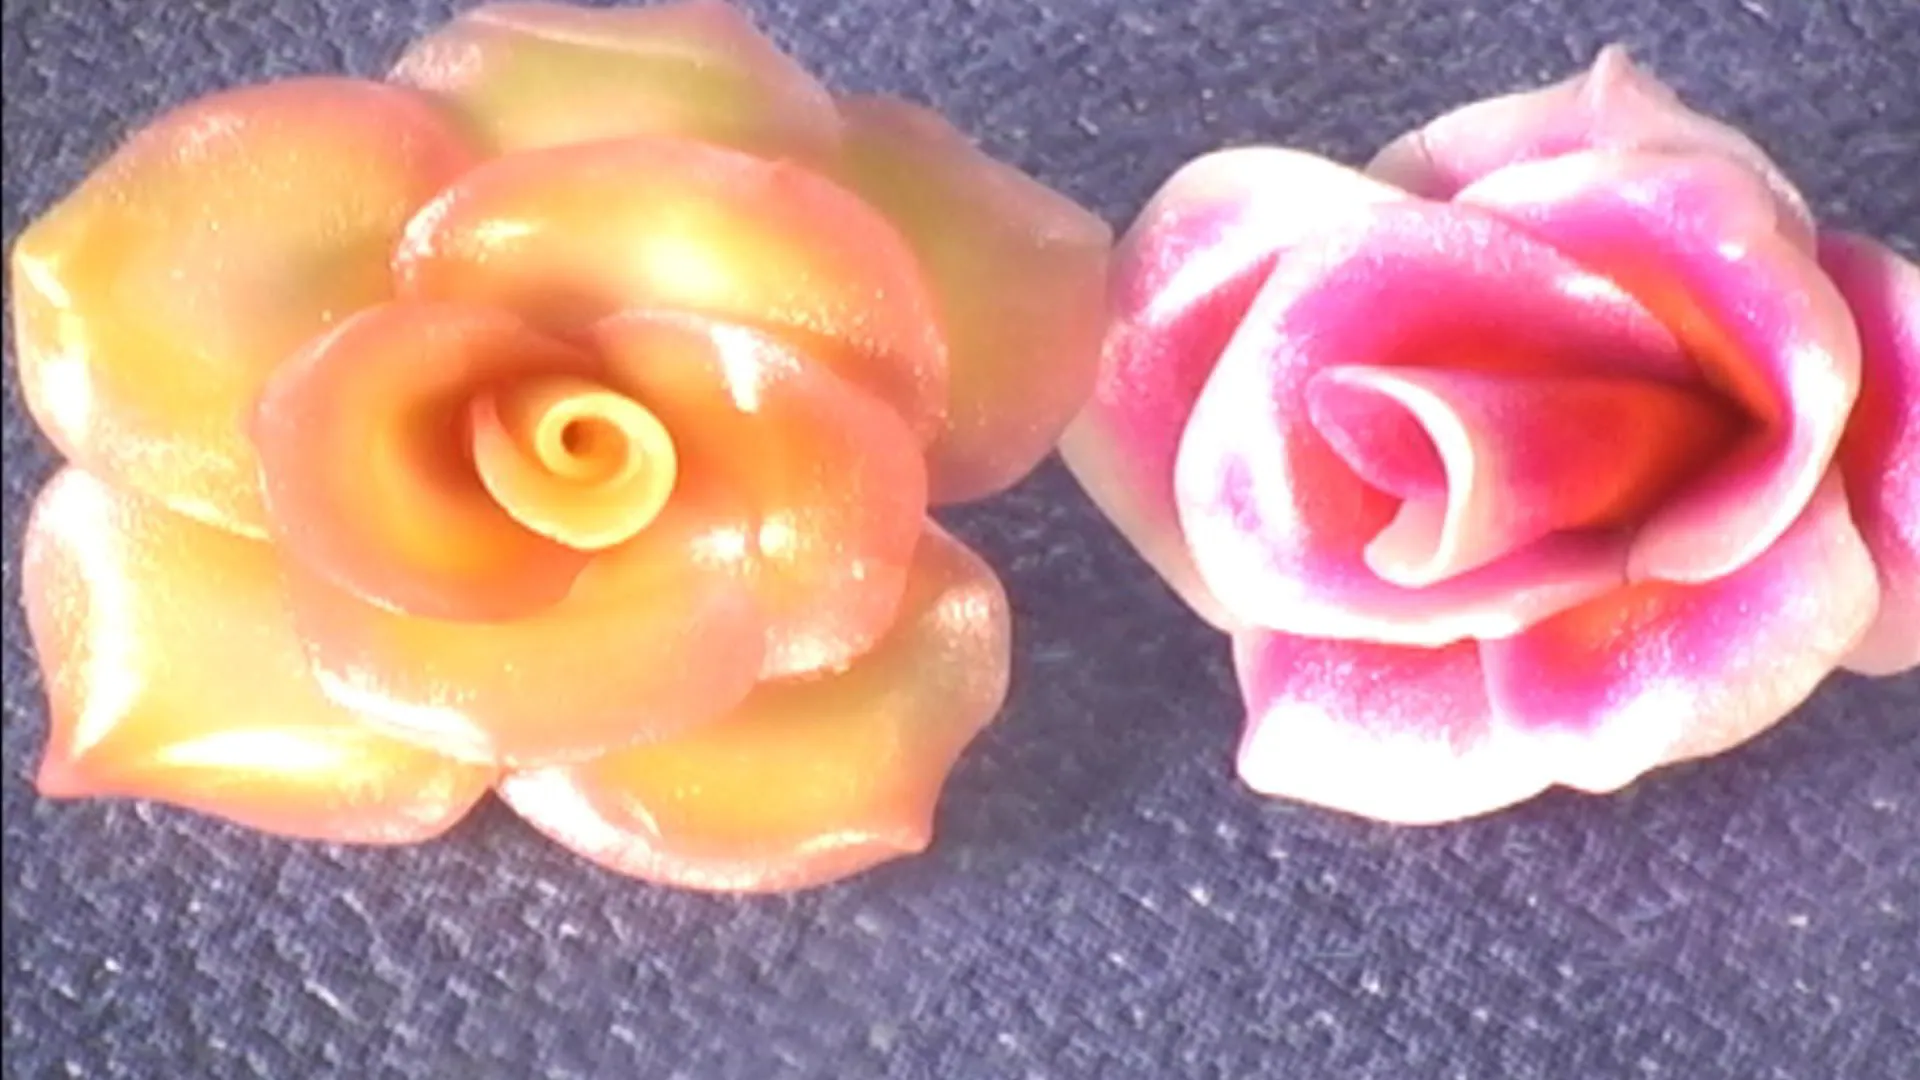 Vol-013-2 + Vol-013-3 Variegated Rose Flower Petal Cane and Rose Beads